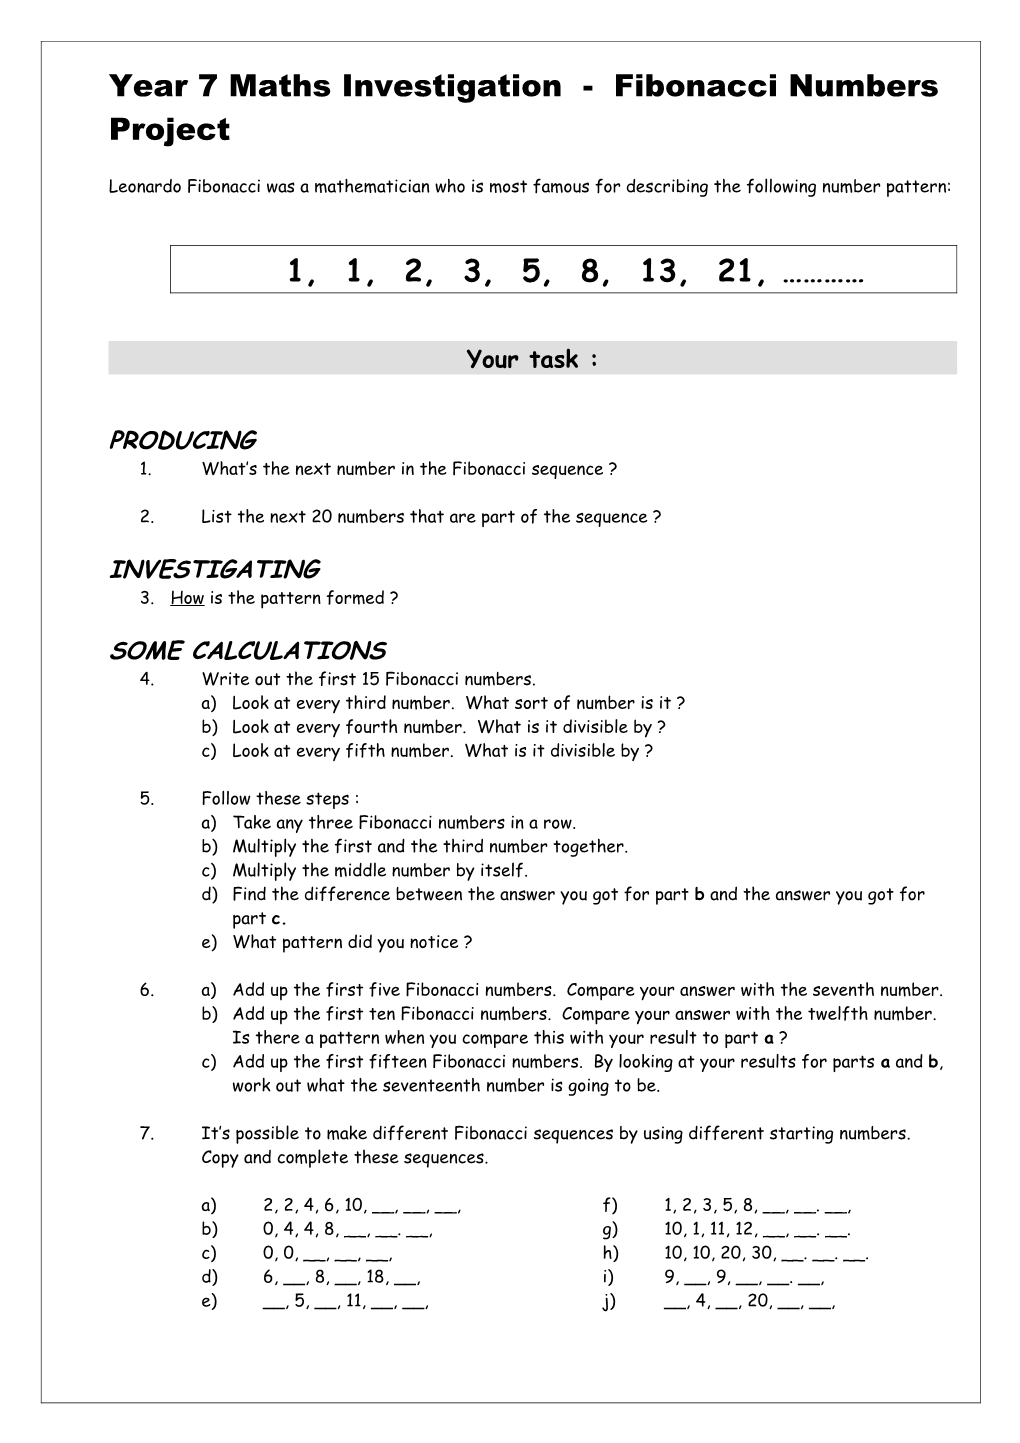 Year 7 Maths Investigation - Fibonacci Numbers Project